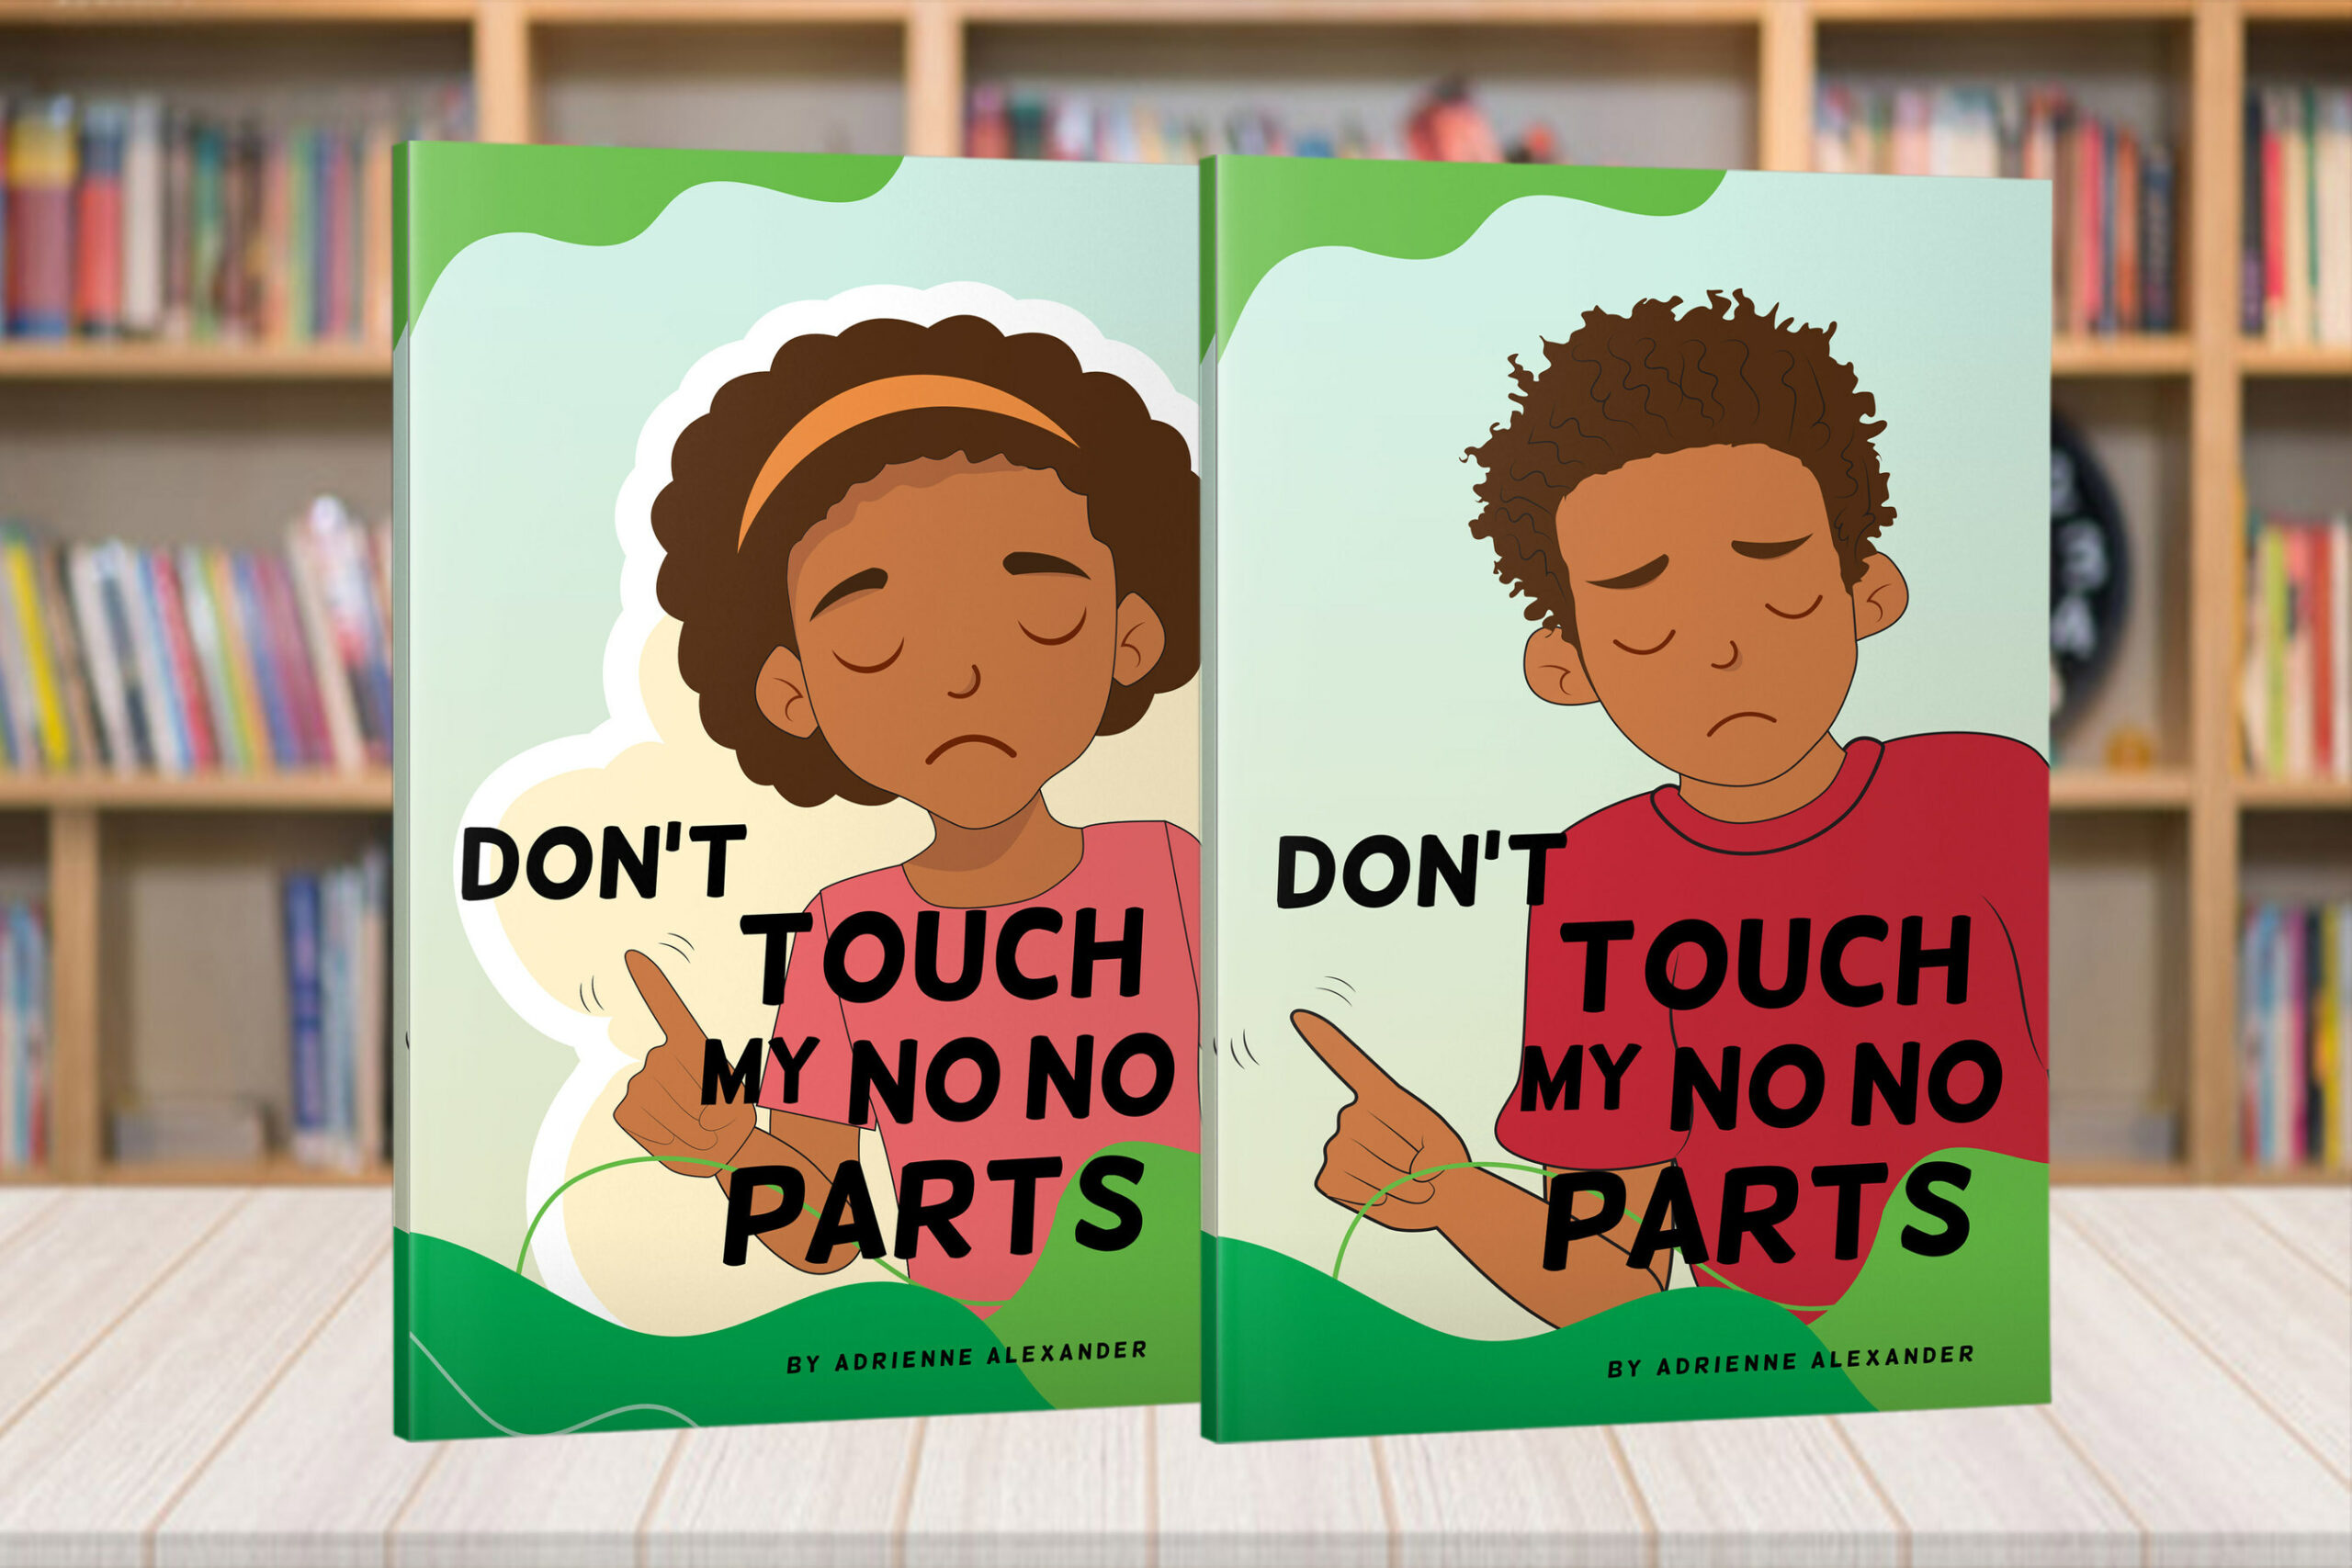 Adrienne Alexander Releases New Safe Touch Children’s Book